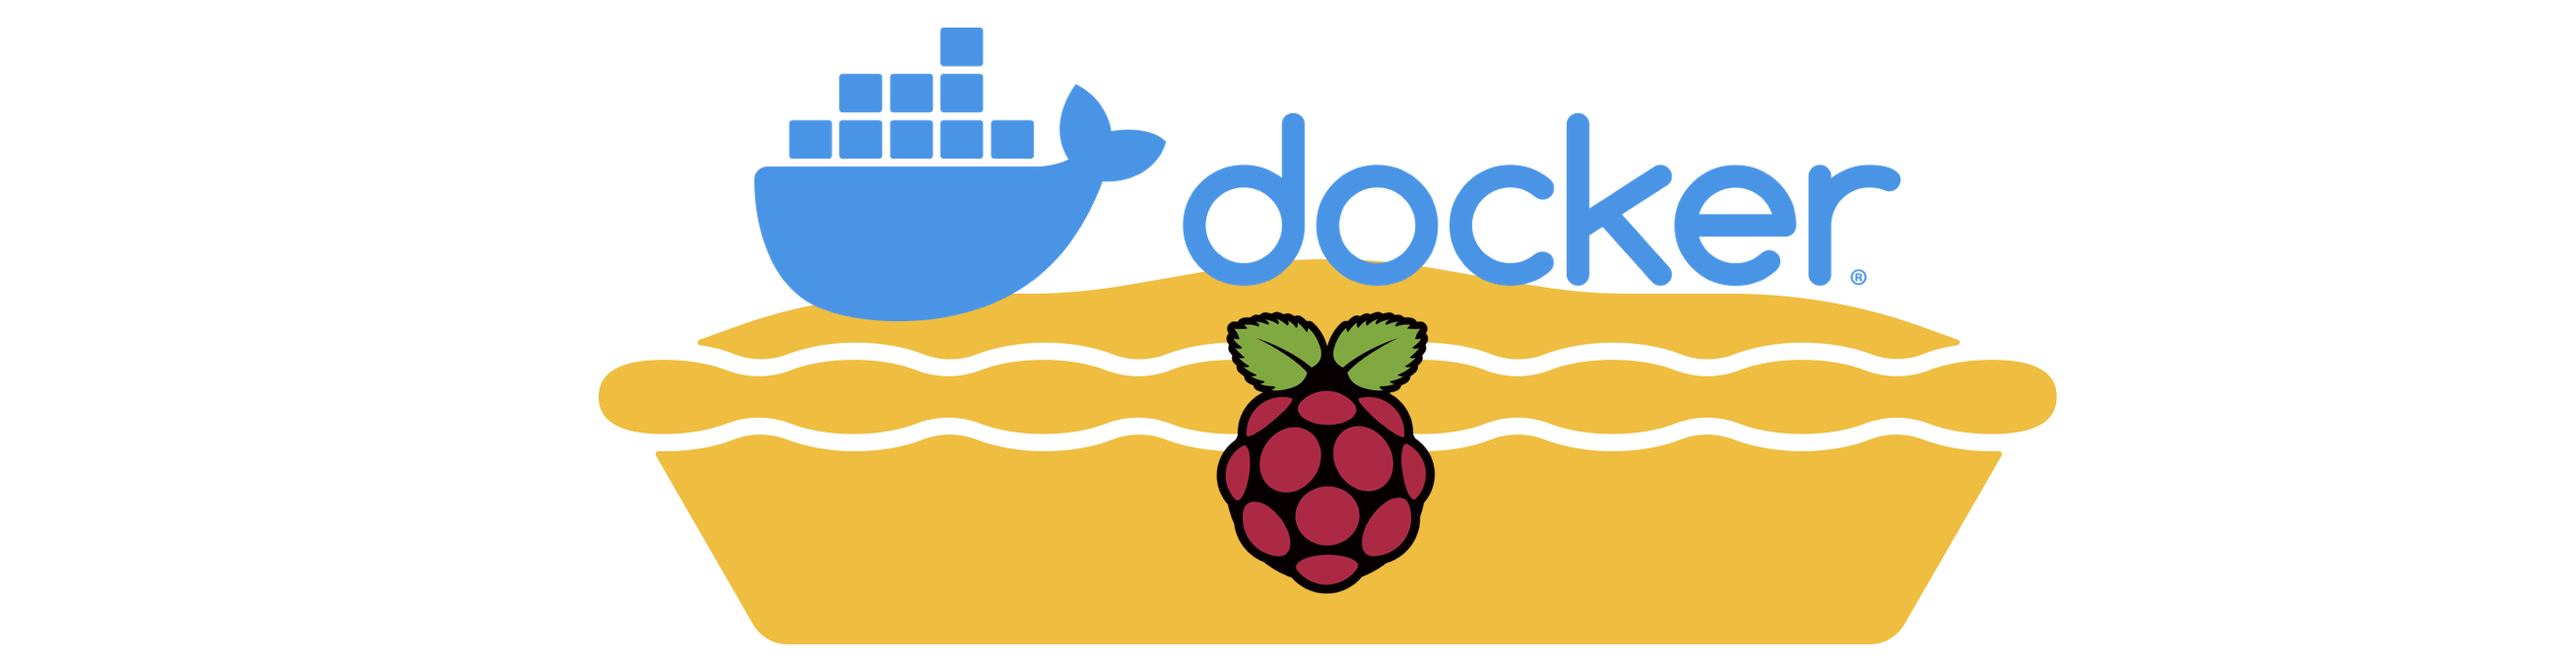 Raspberry Pi Docker Web Server